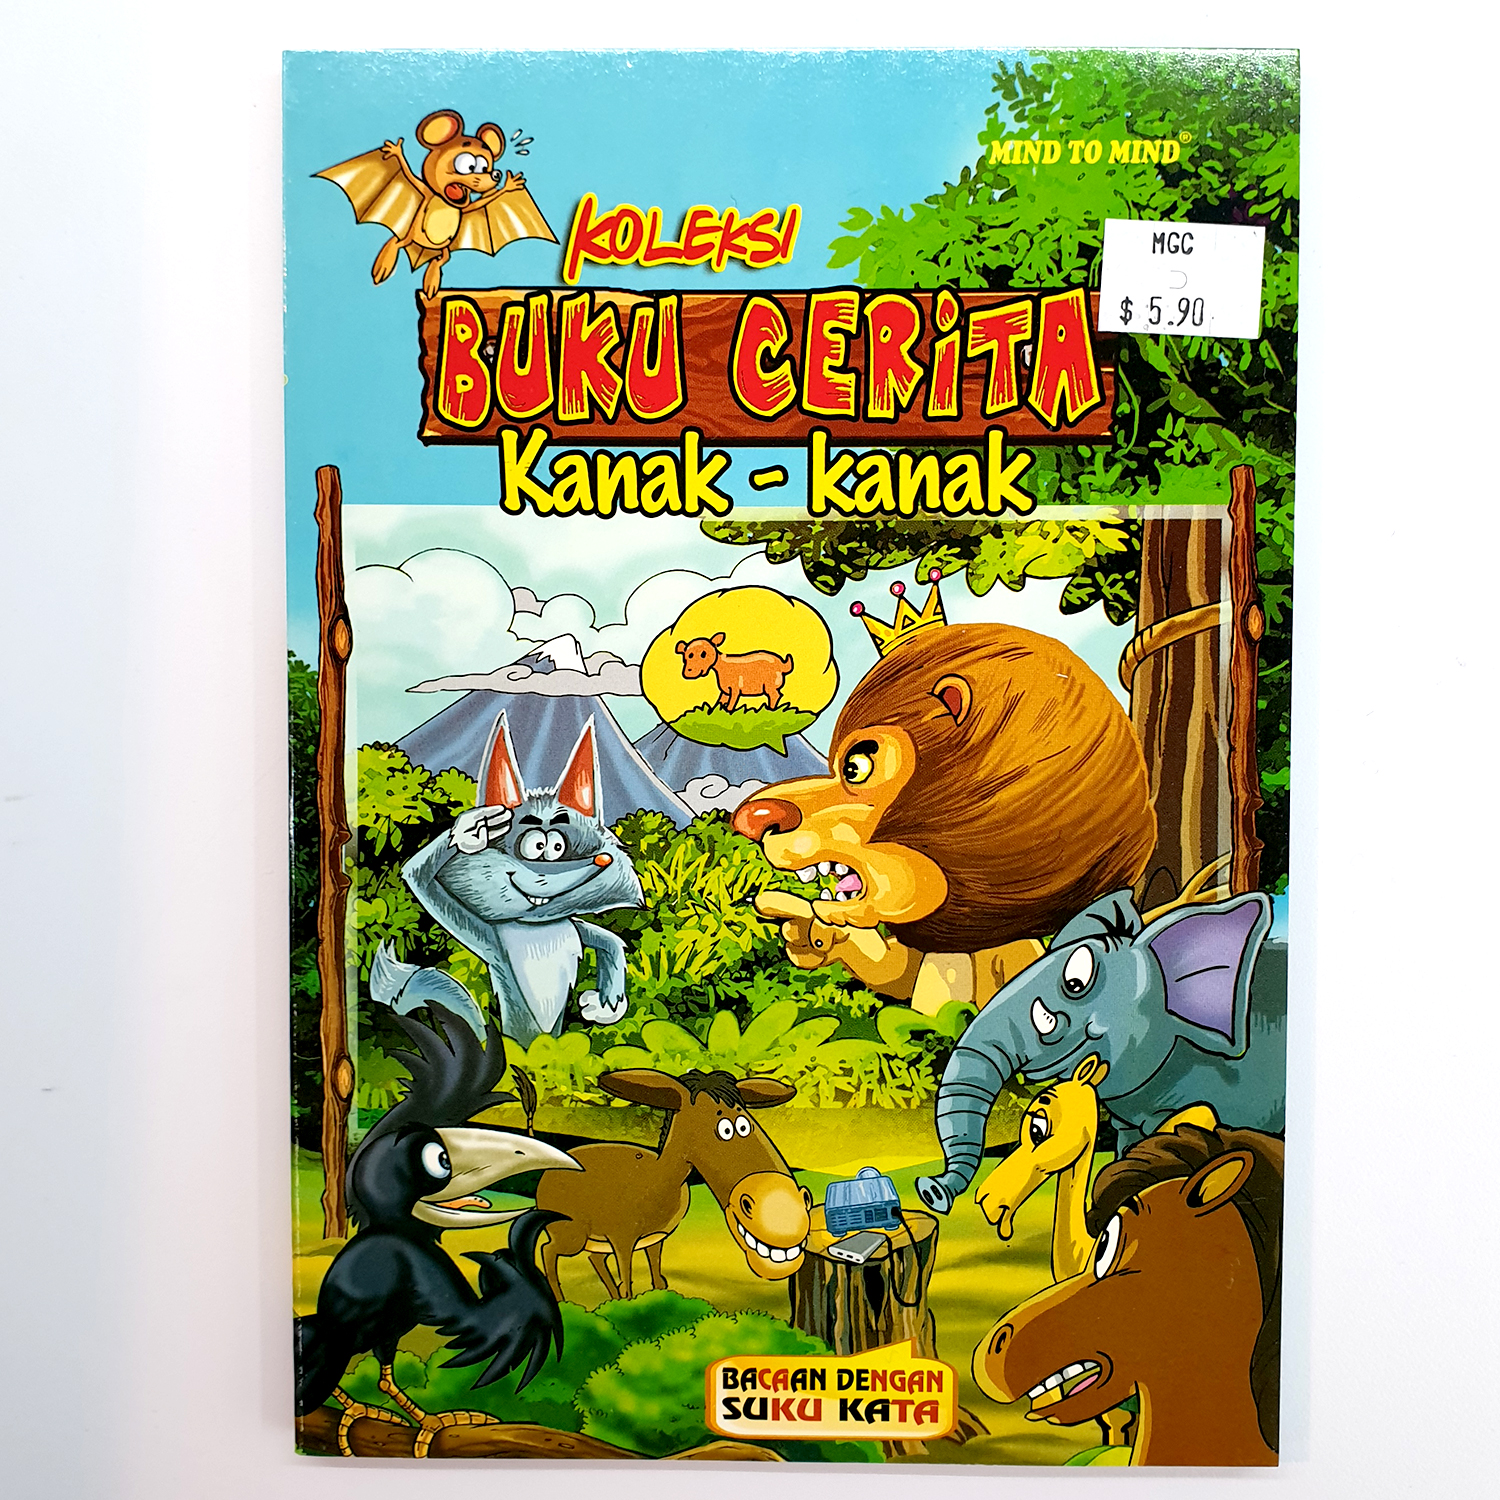 Koleksi Buku Cerita Kanak Kanak Bacaan Dengan Suku Kata Bahasa Malay Children Story Storybook Paperback Format Lazada Singapore